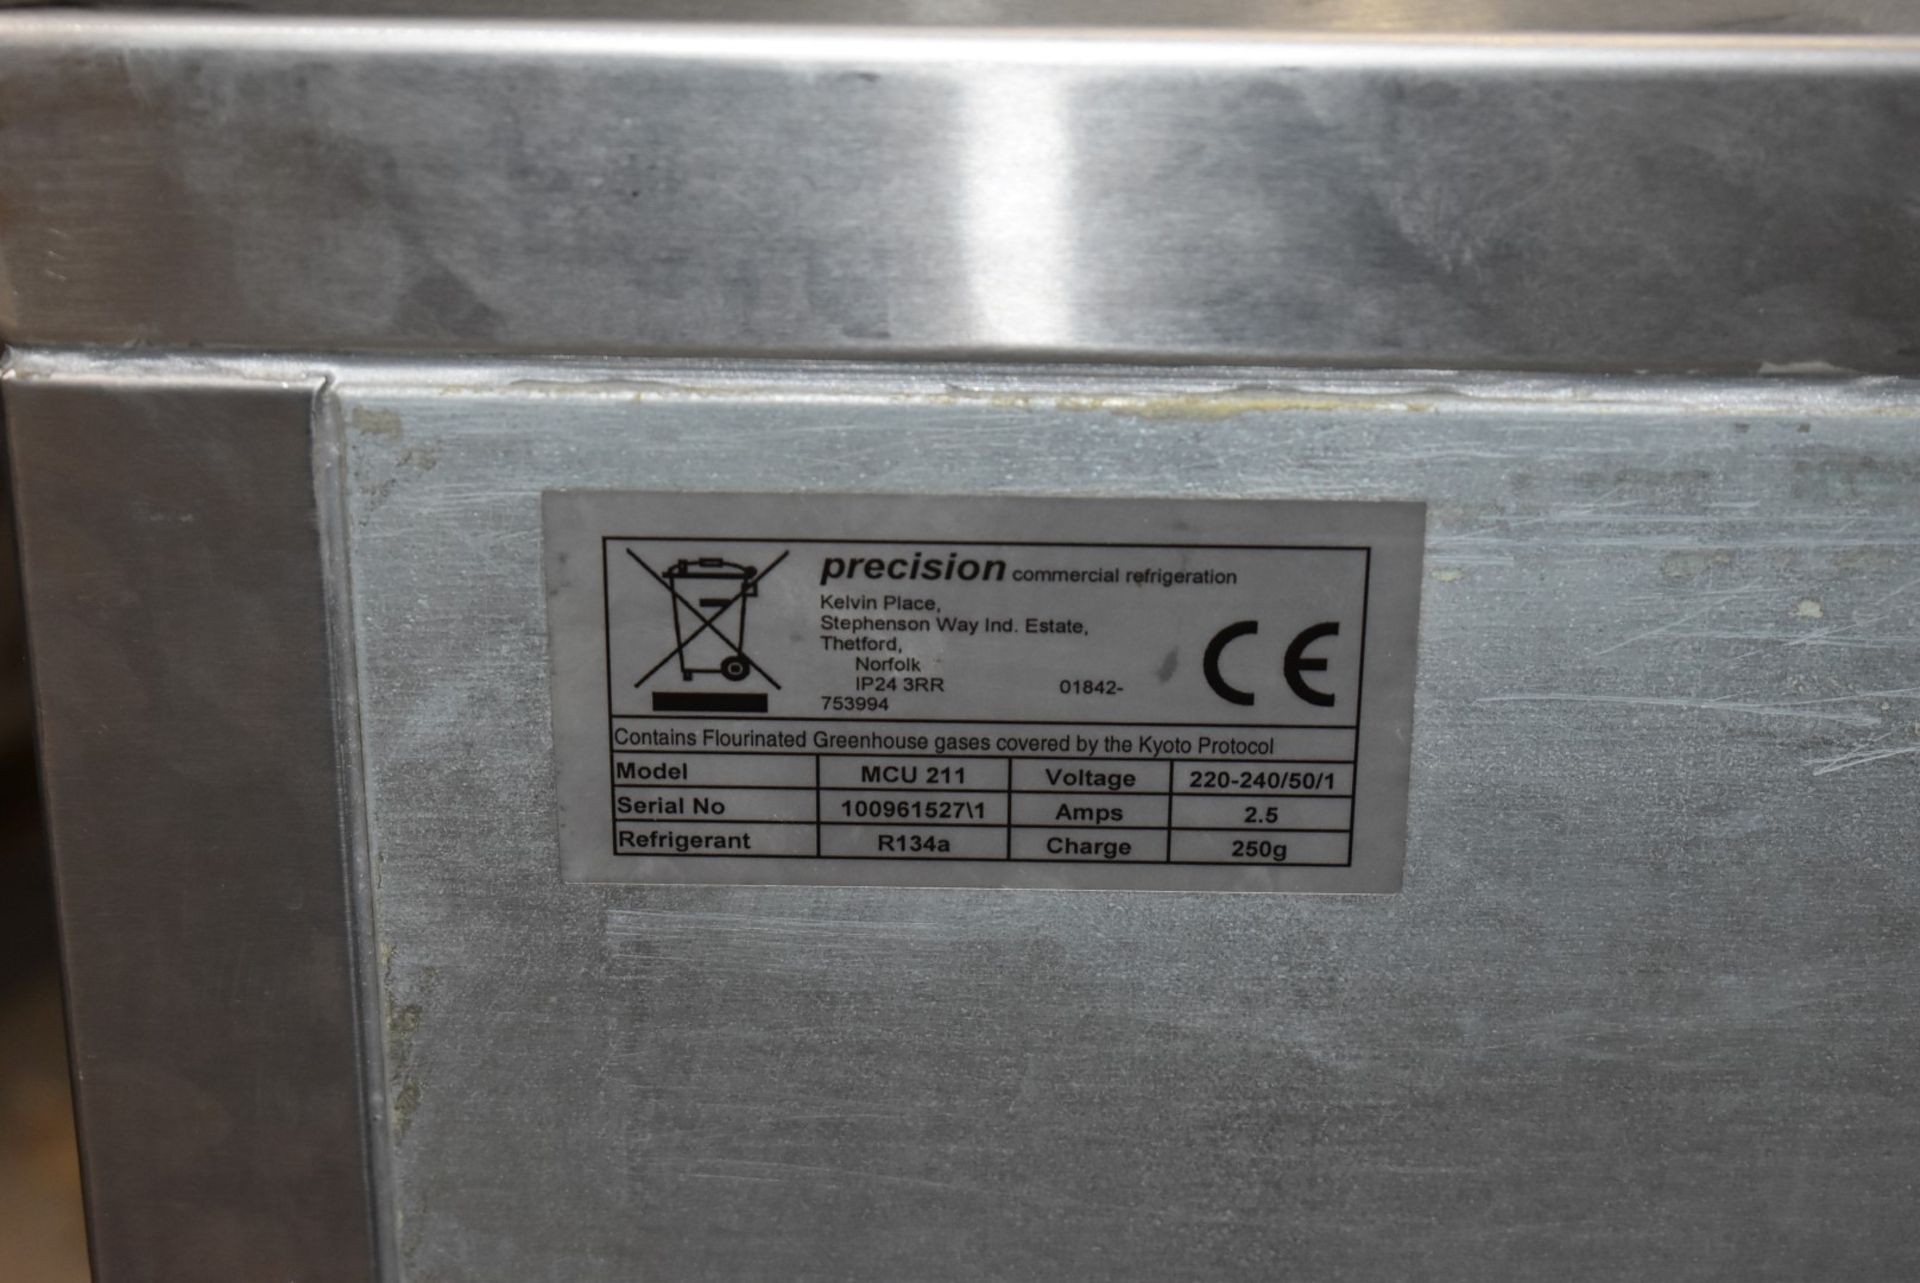 1 x Precision Two Door Countertop Refrigerator - Model MCU 211 - Dimensions: H87 x W134 x D65 cms - Image 12 of 12